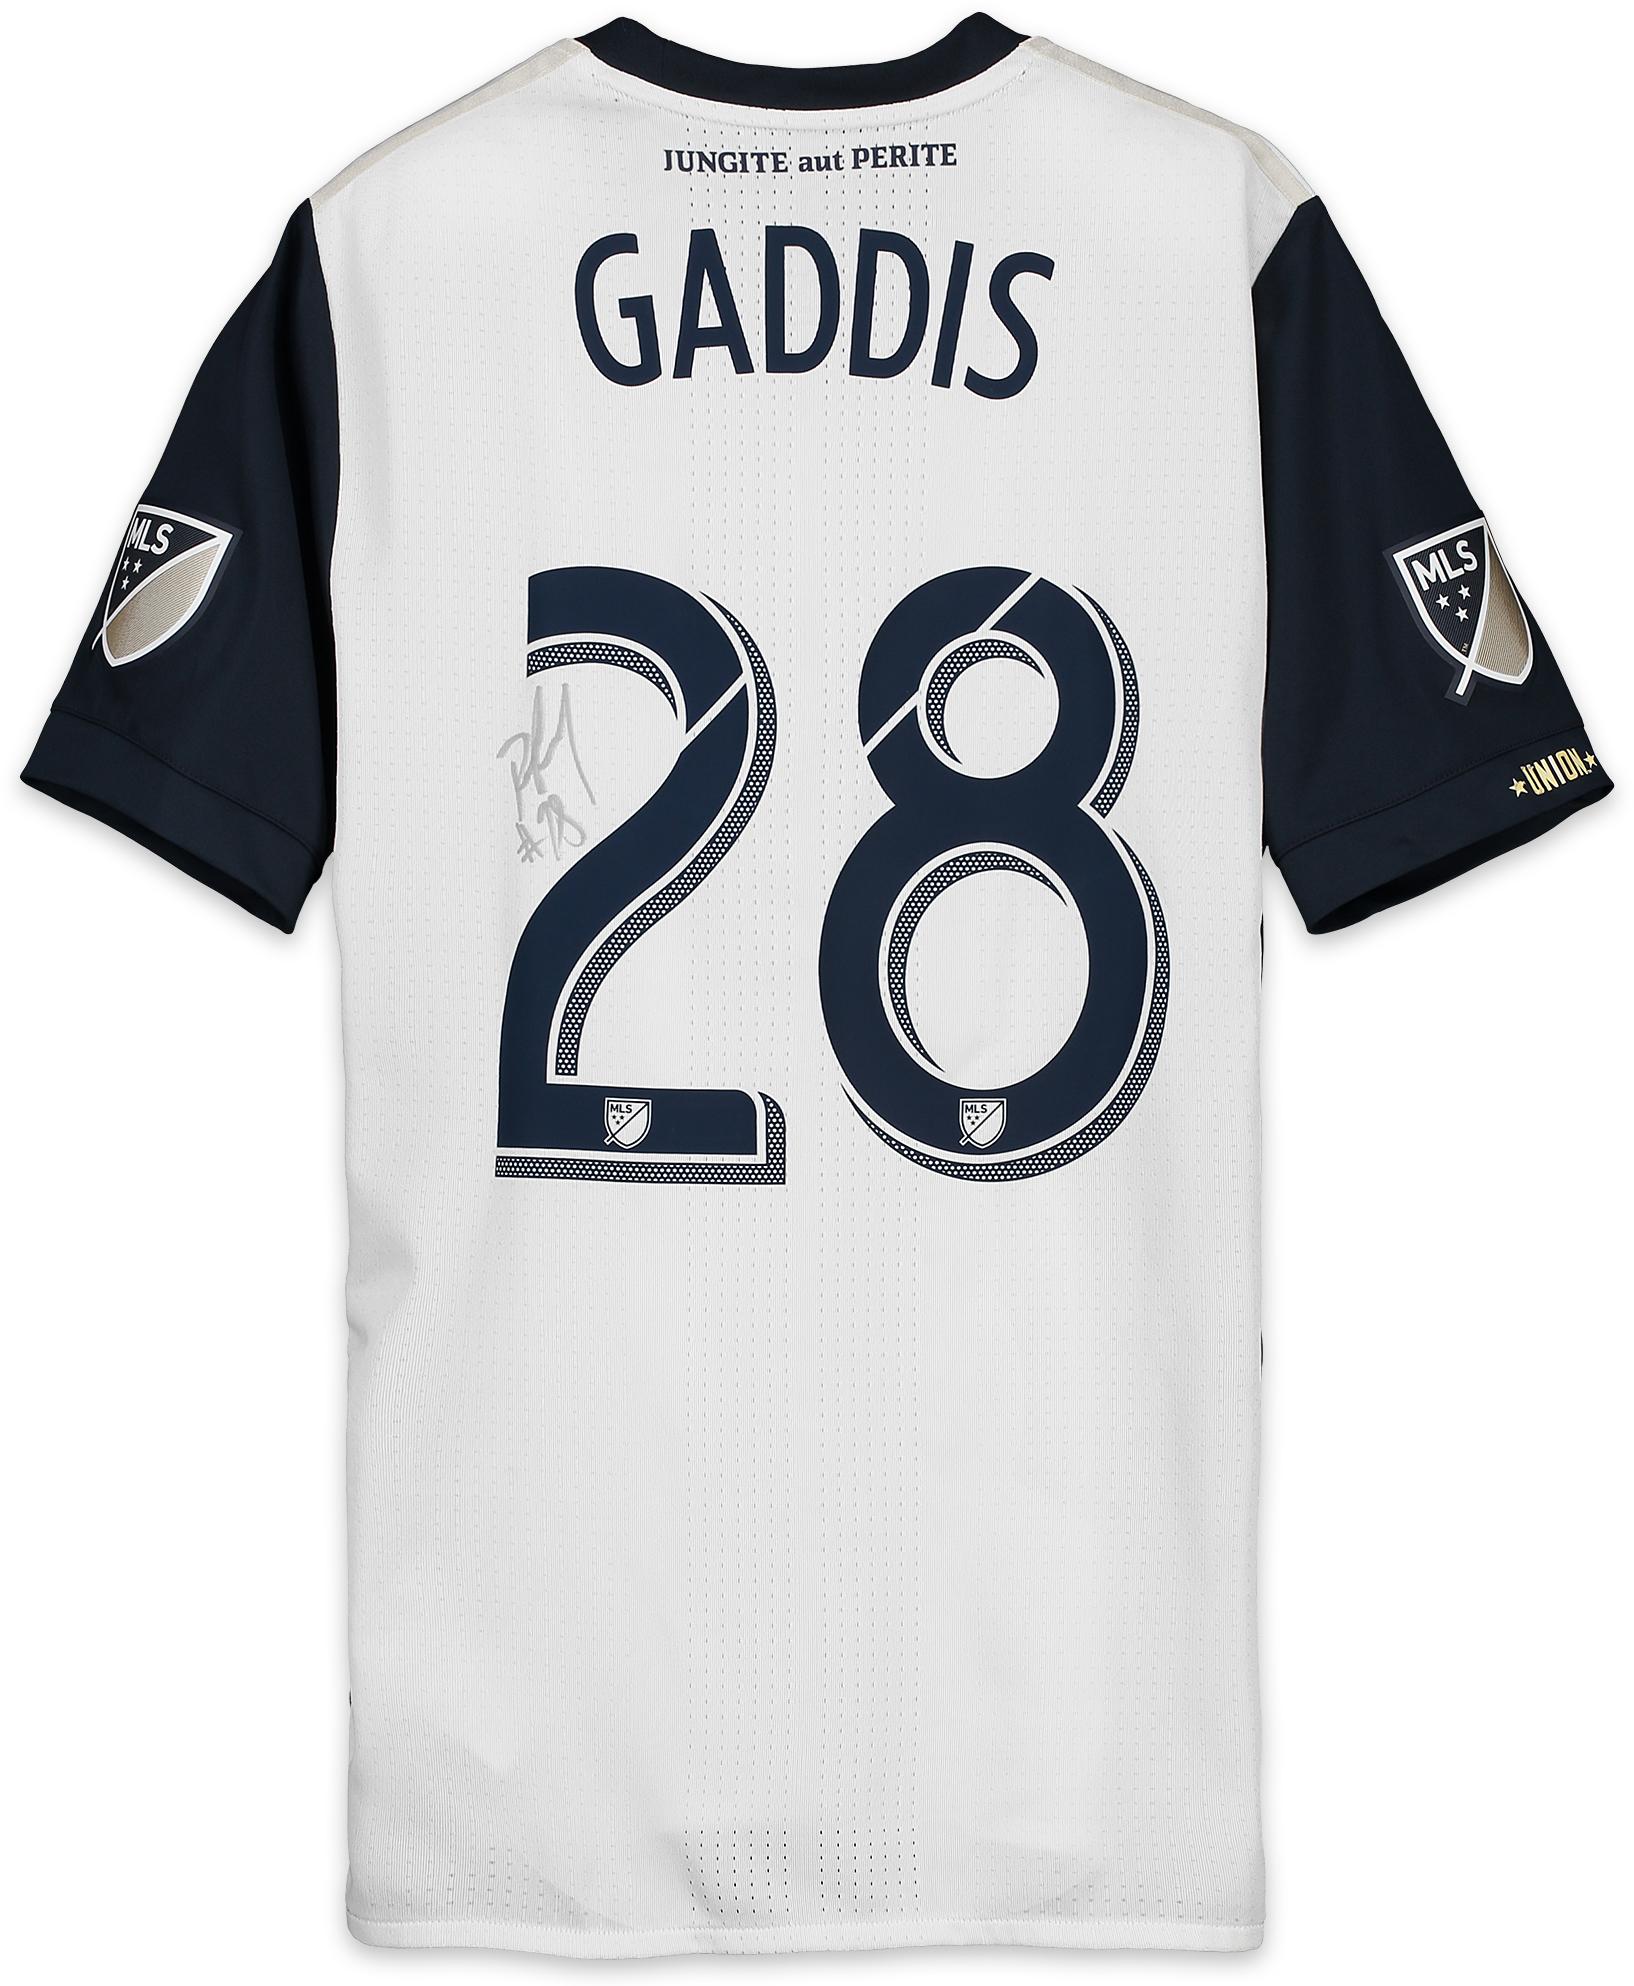 Raymon Gaddis Philadelphia Union Autographed Match-Used White #28 Jersey from the 2018 MLS Season - Fanatics Authentic Certified